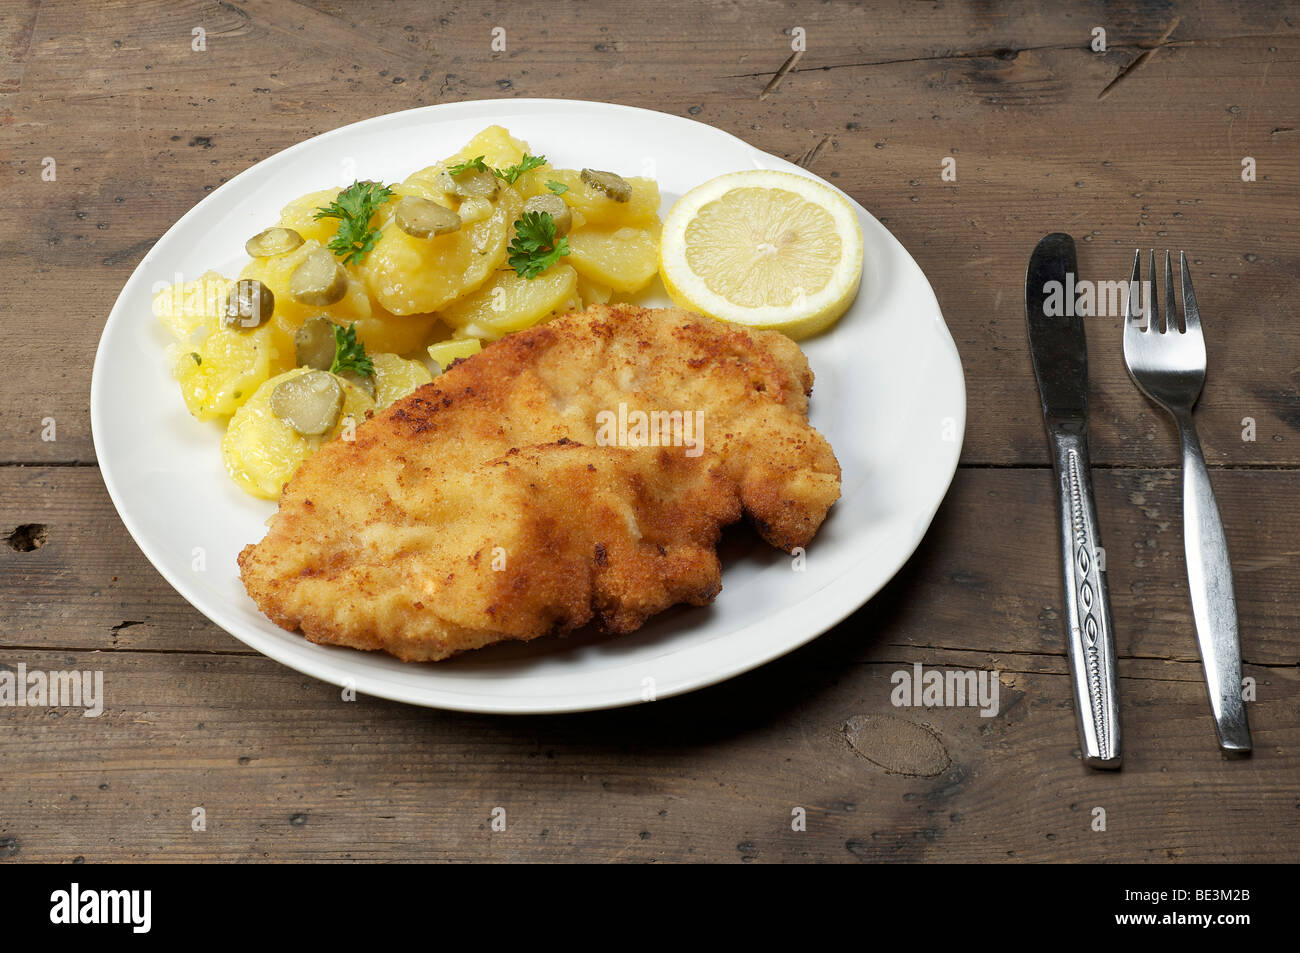 Putenschnitzel Wiener Art mit Kartoffelsalat Stockfotografie - Alamy